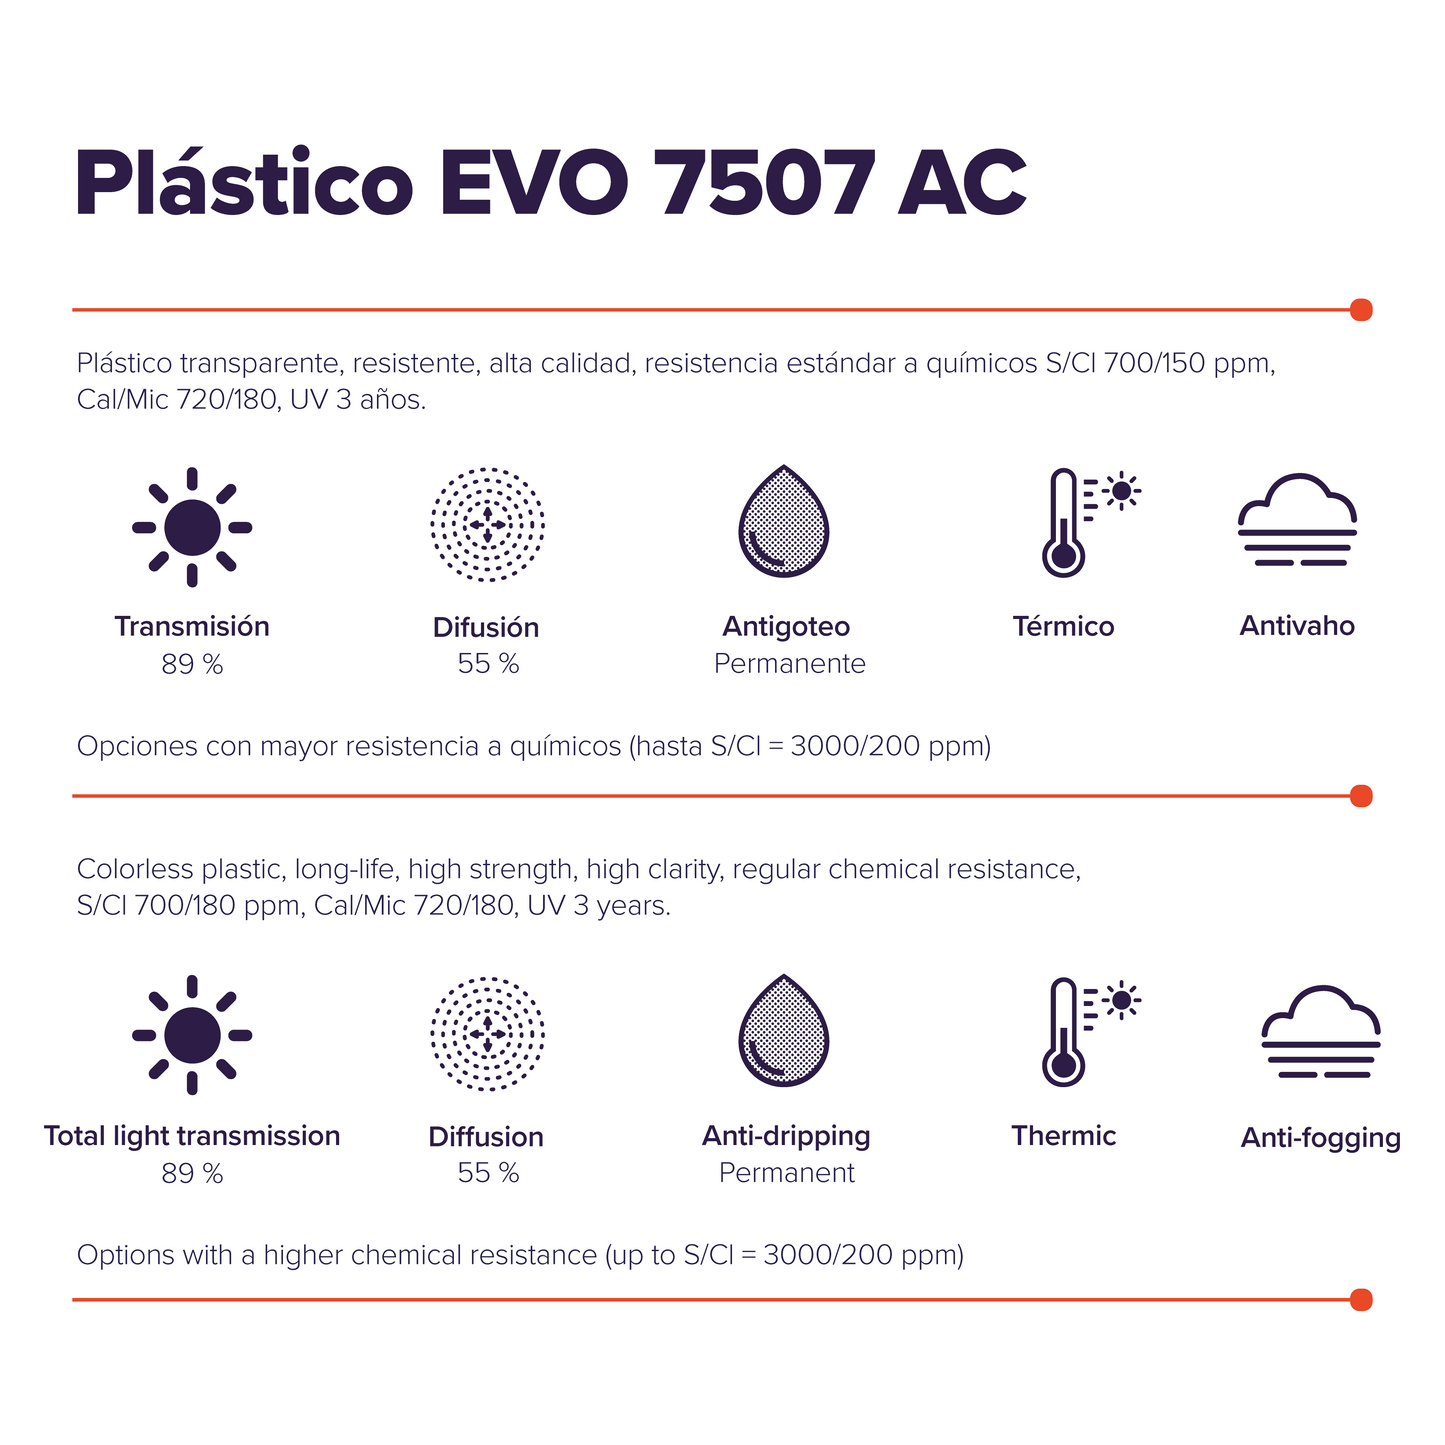 Plastic EVO 7507 AC